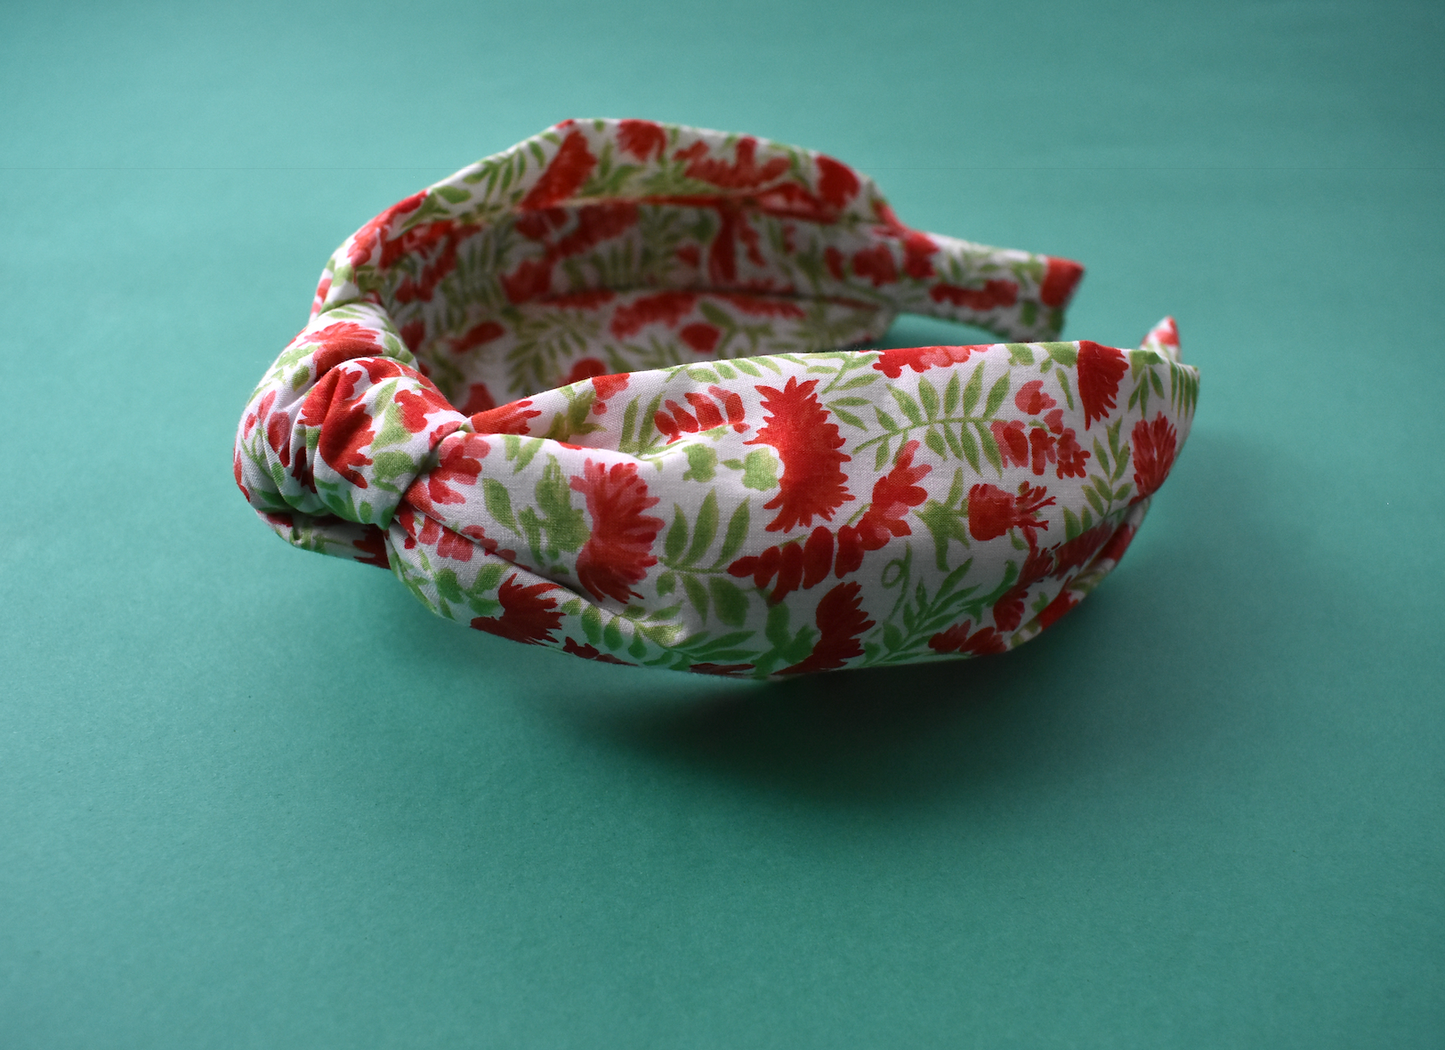 Ladies Knot Alice headband - Vintage Liberty of London Chrysanthemum